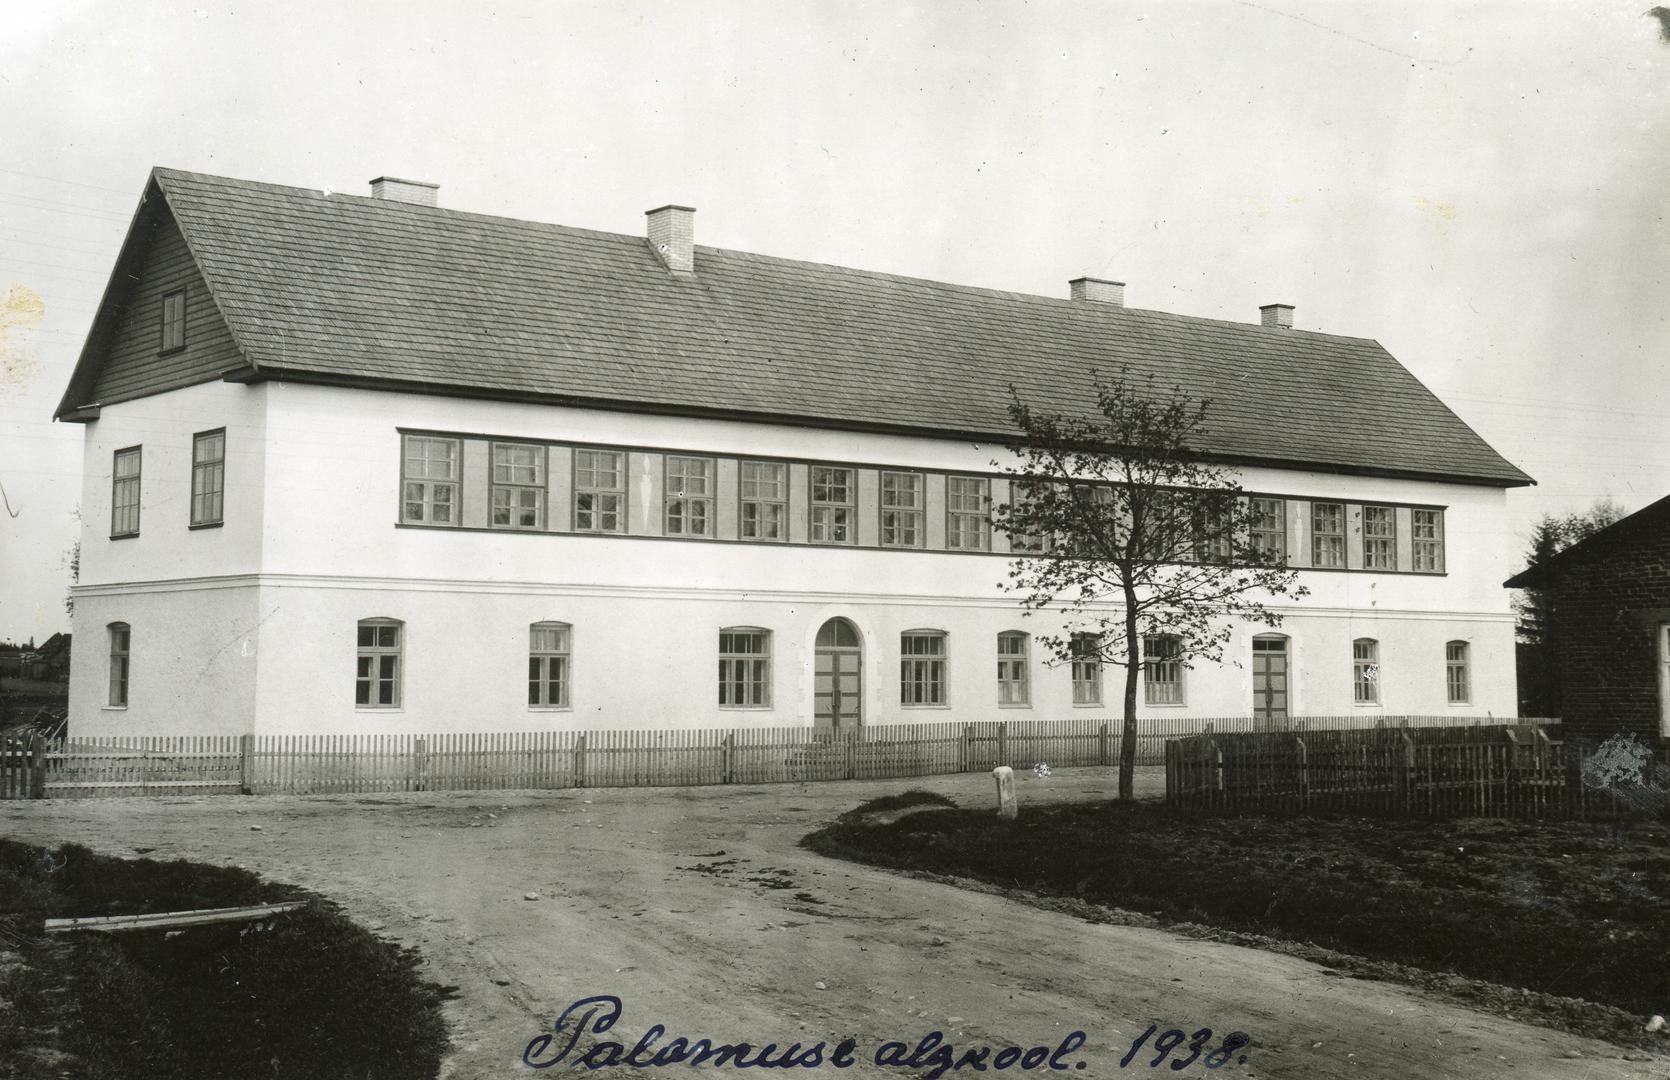 Palamuse Start School Building